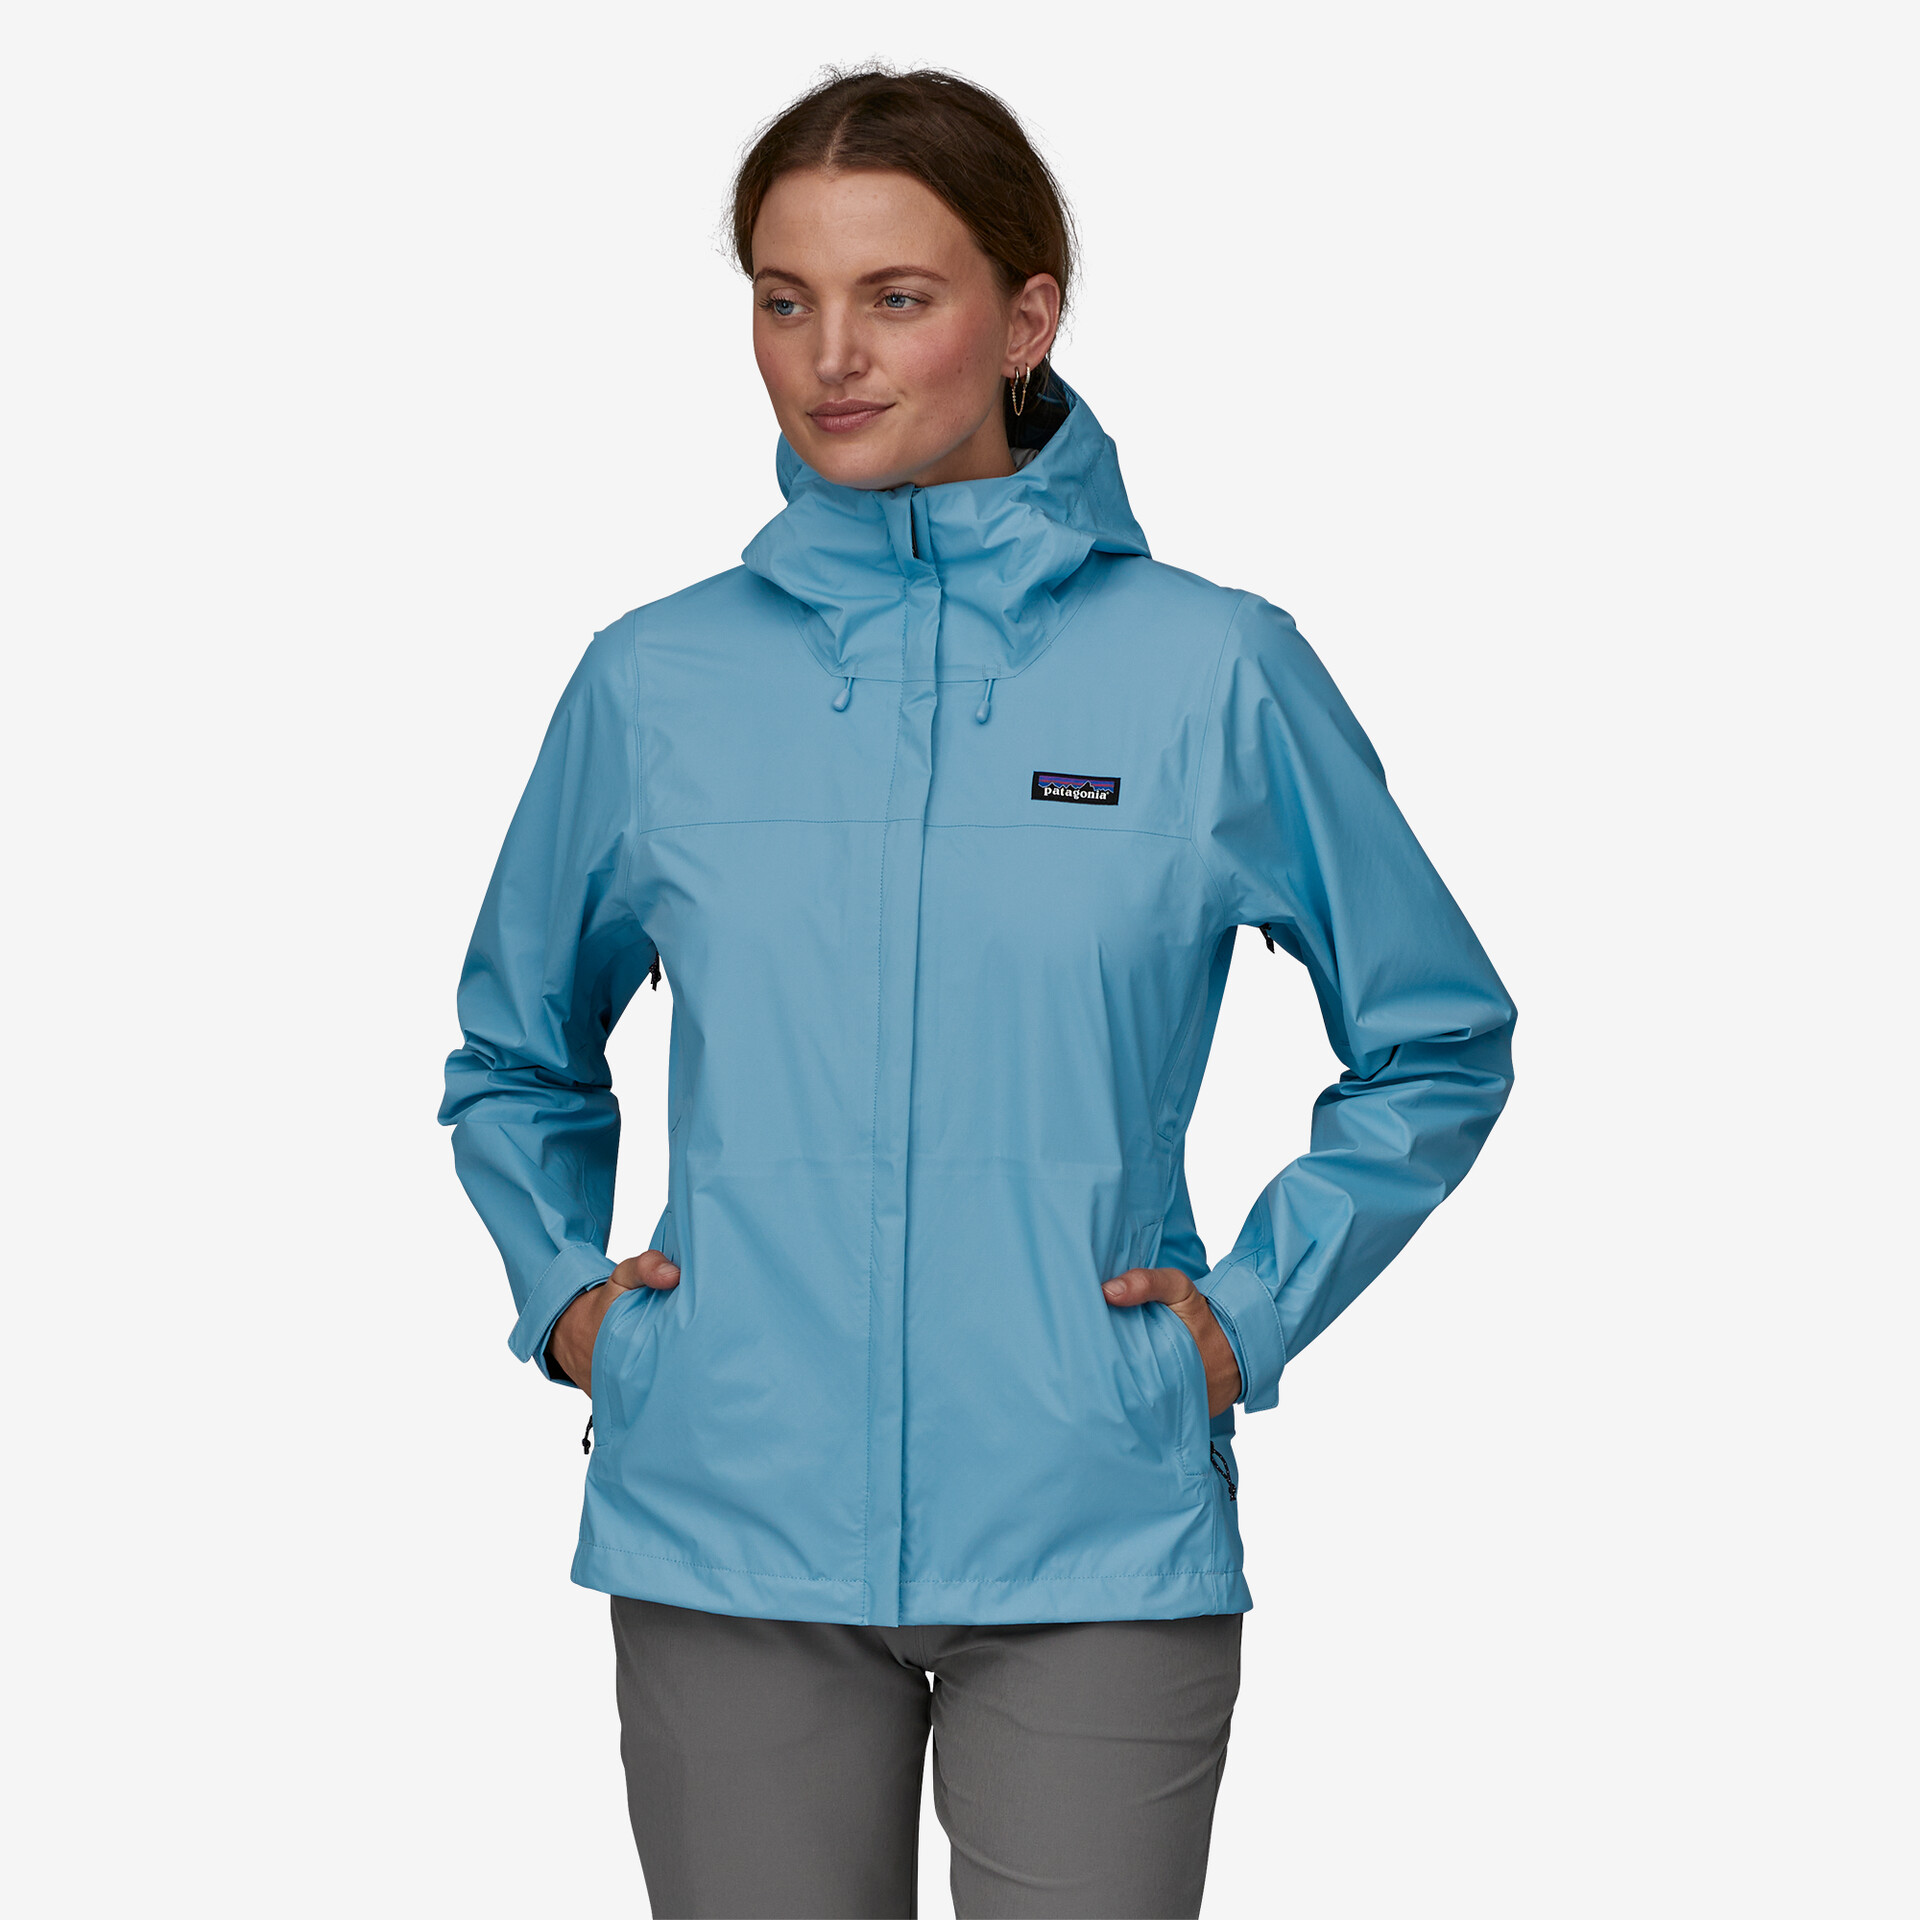 Torrentshell 3L Rain Jacket by Patagonia, eco-friendly and durable waterproof jacket.